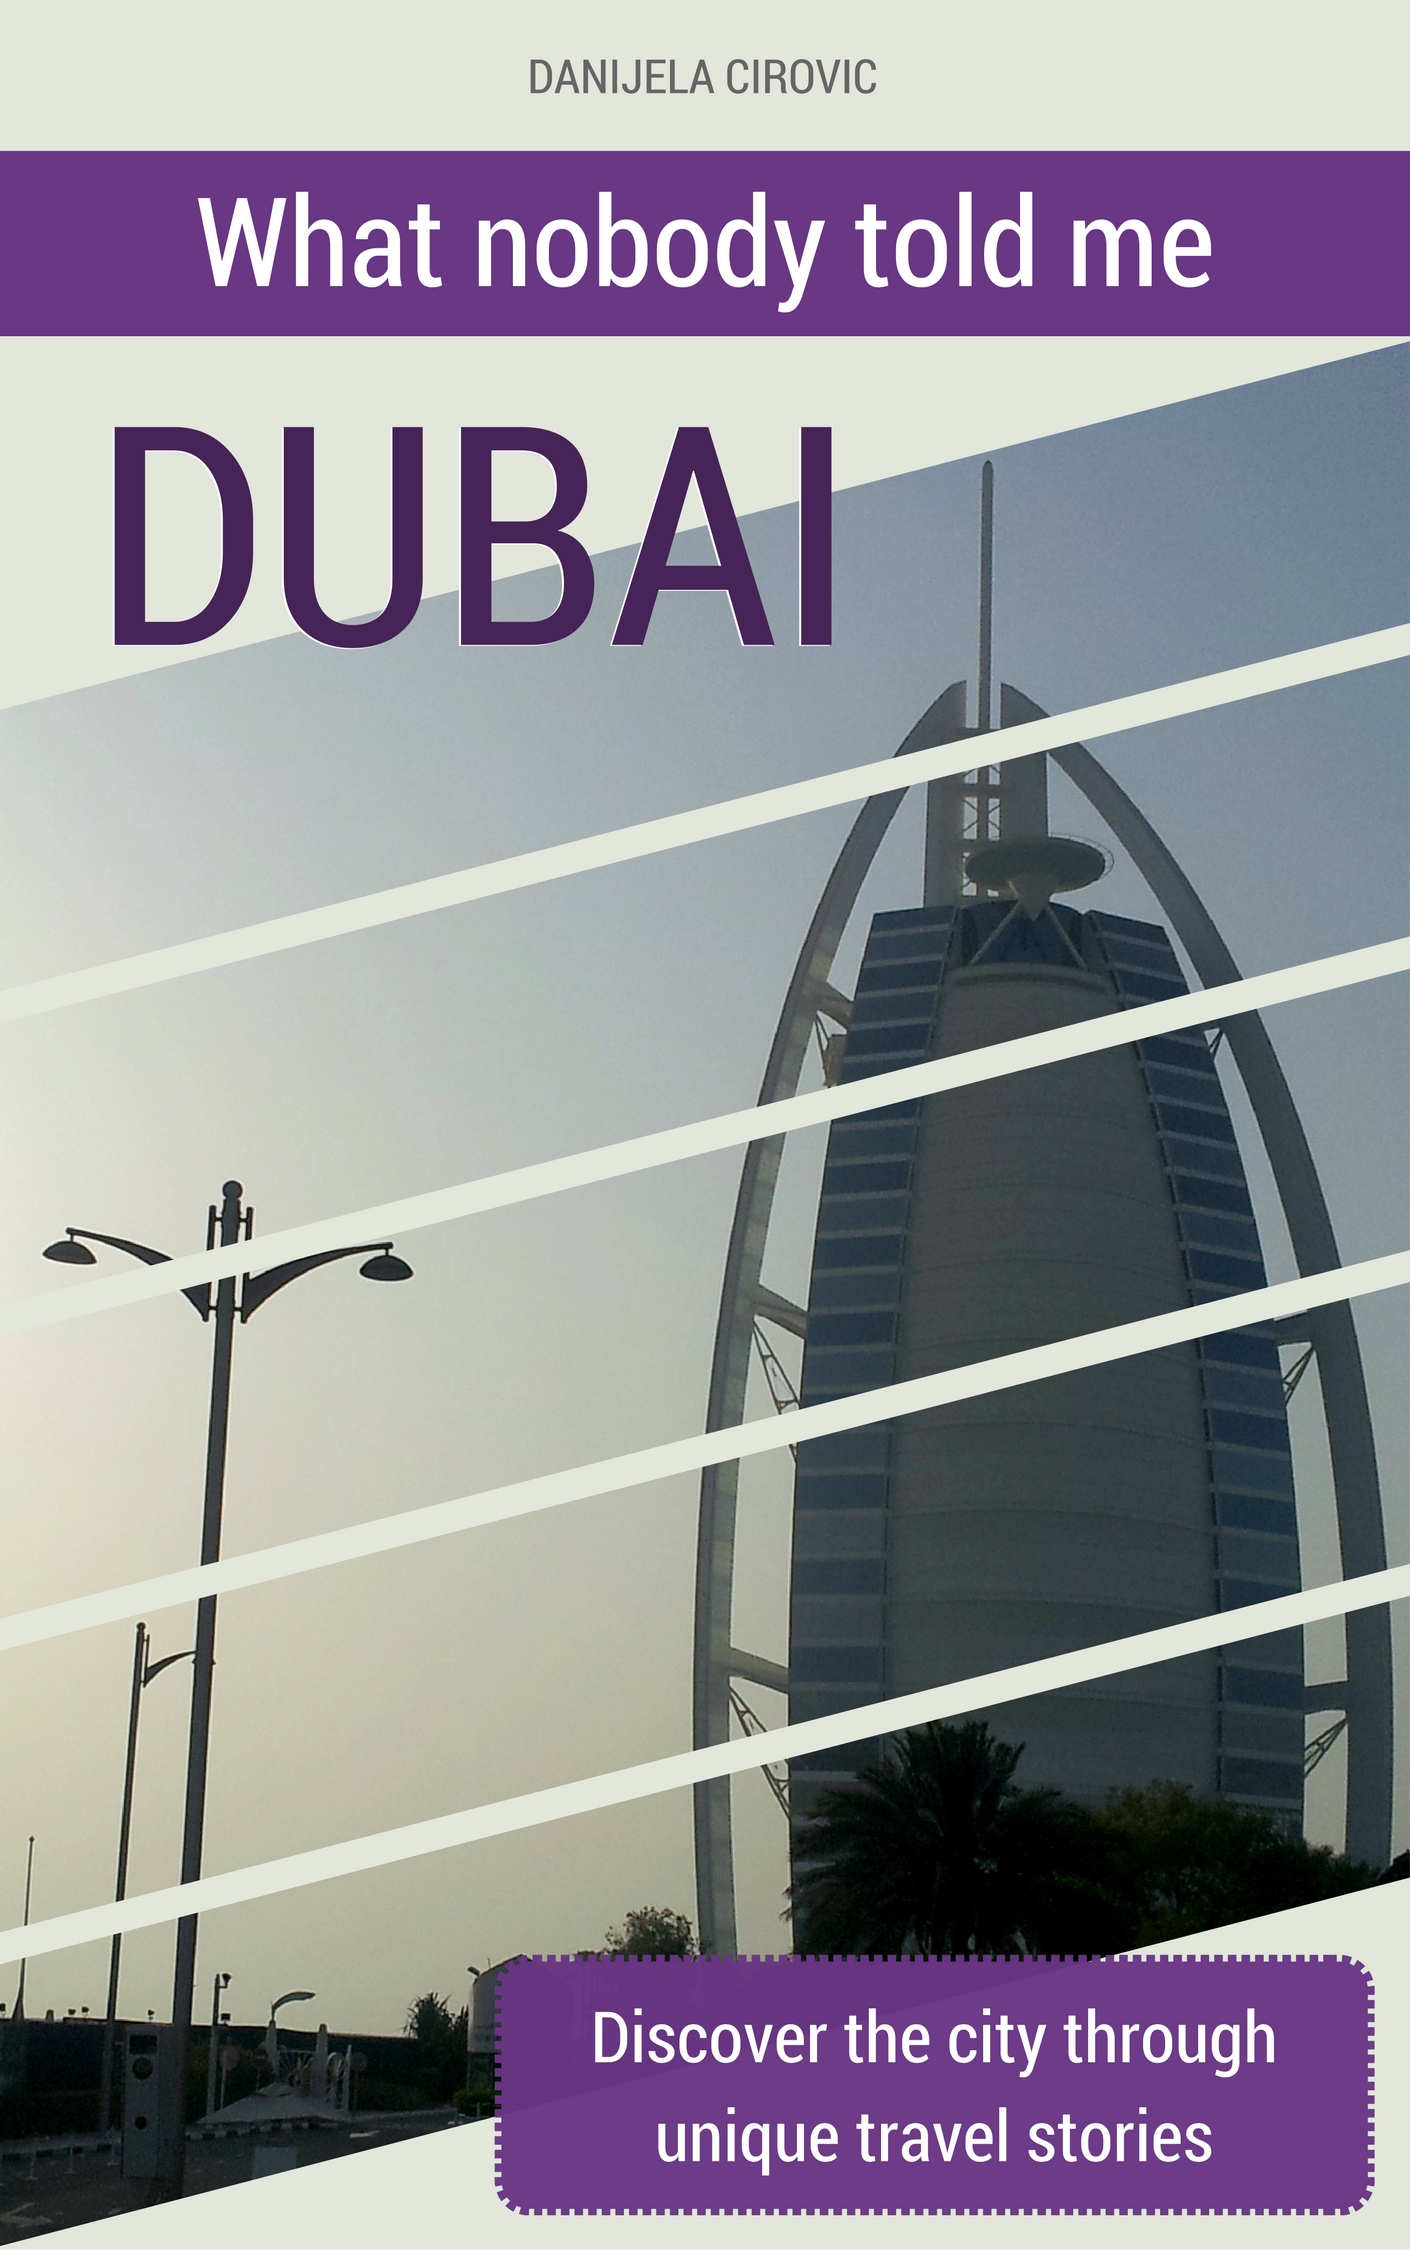 FREE: What Nobody Told Me DUBAI by Danijela Cirovic